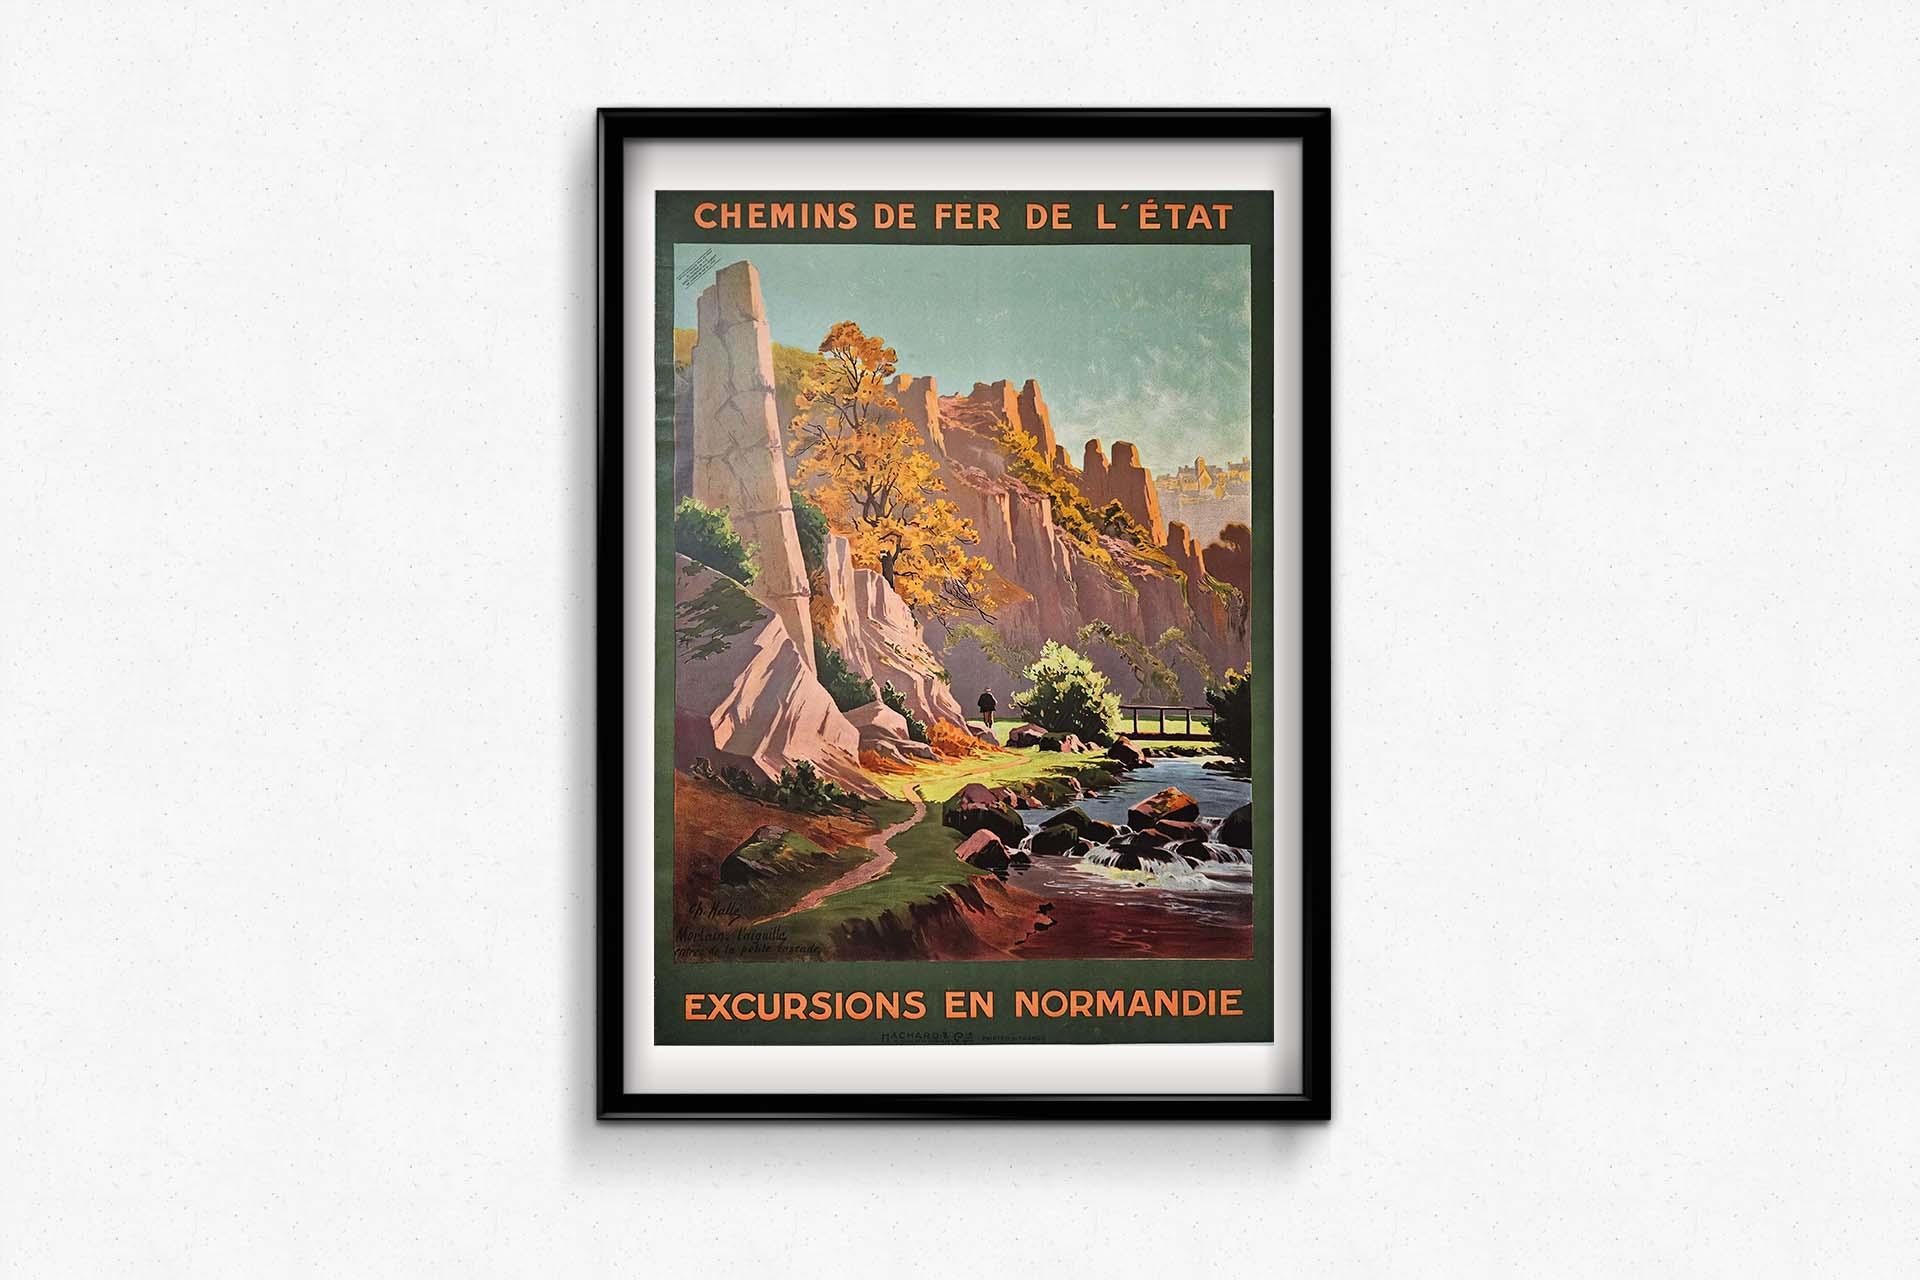 1910 Originalplakat für die Chemins de fer de l'État - Excursion en Normandie im Angebot 2